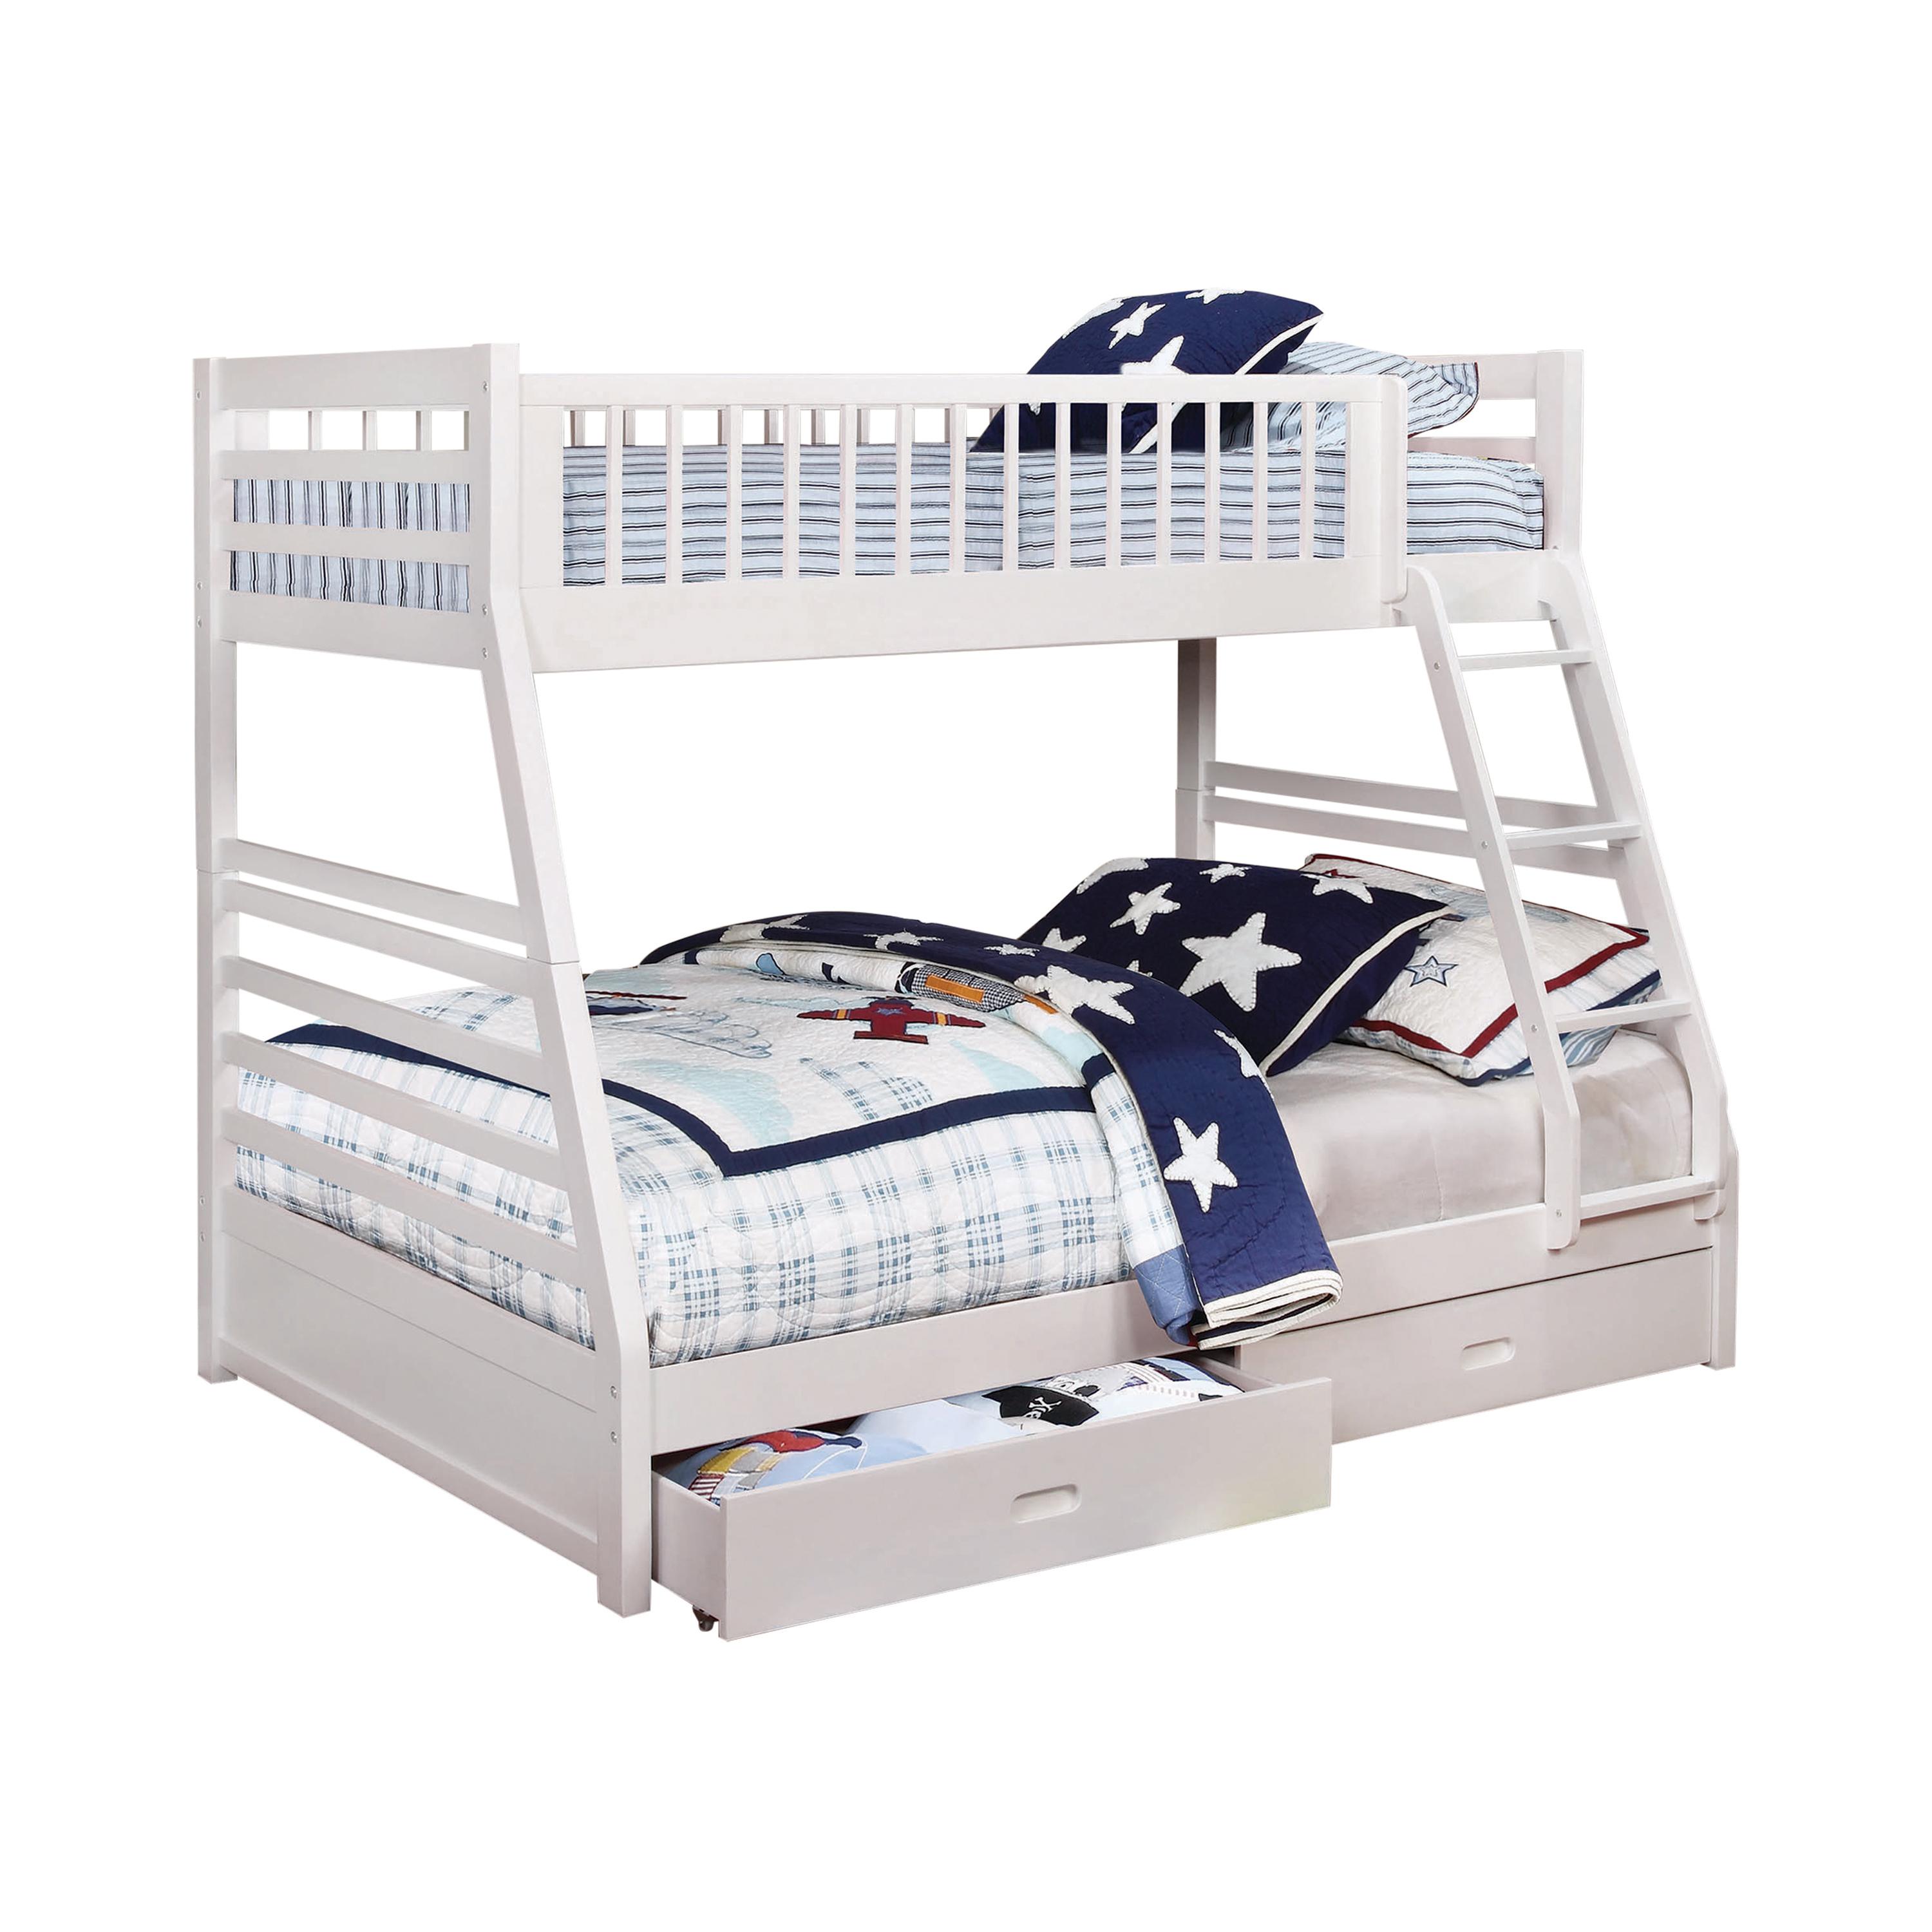 Transitional Bunk Bed 460180 Ashton 460180 in White 